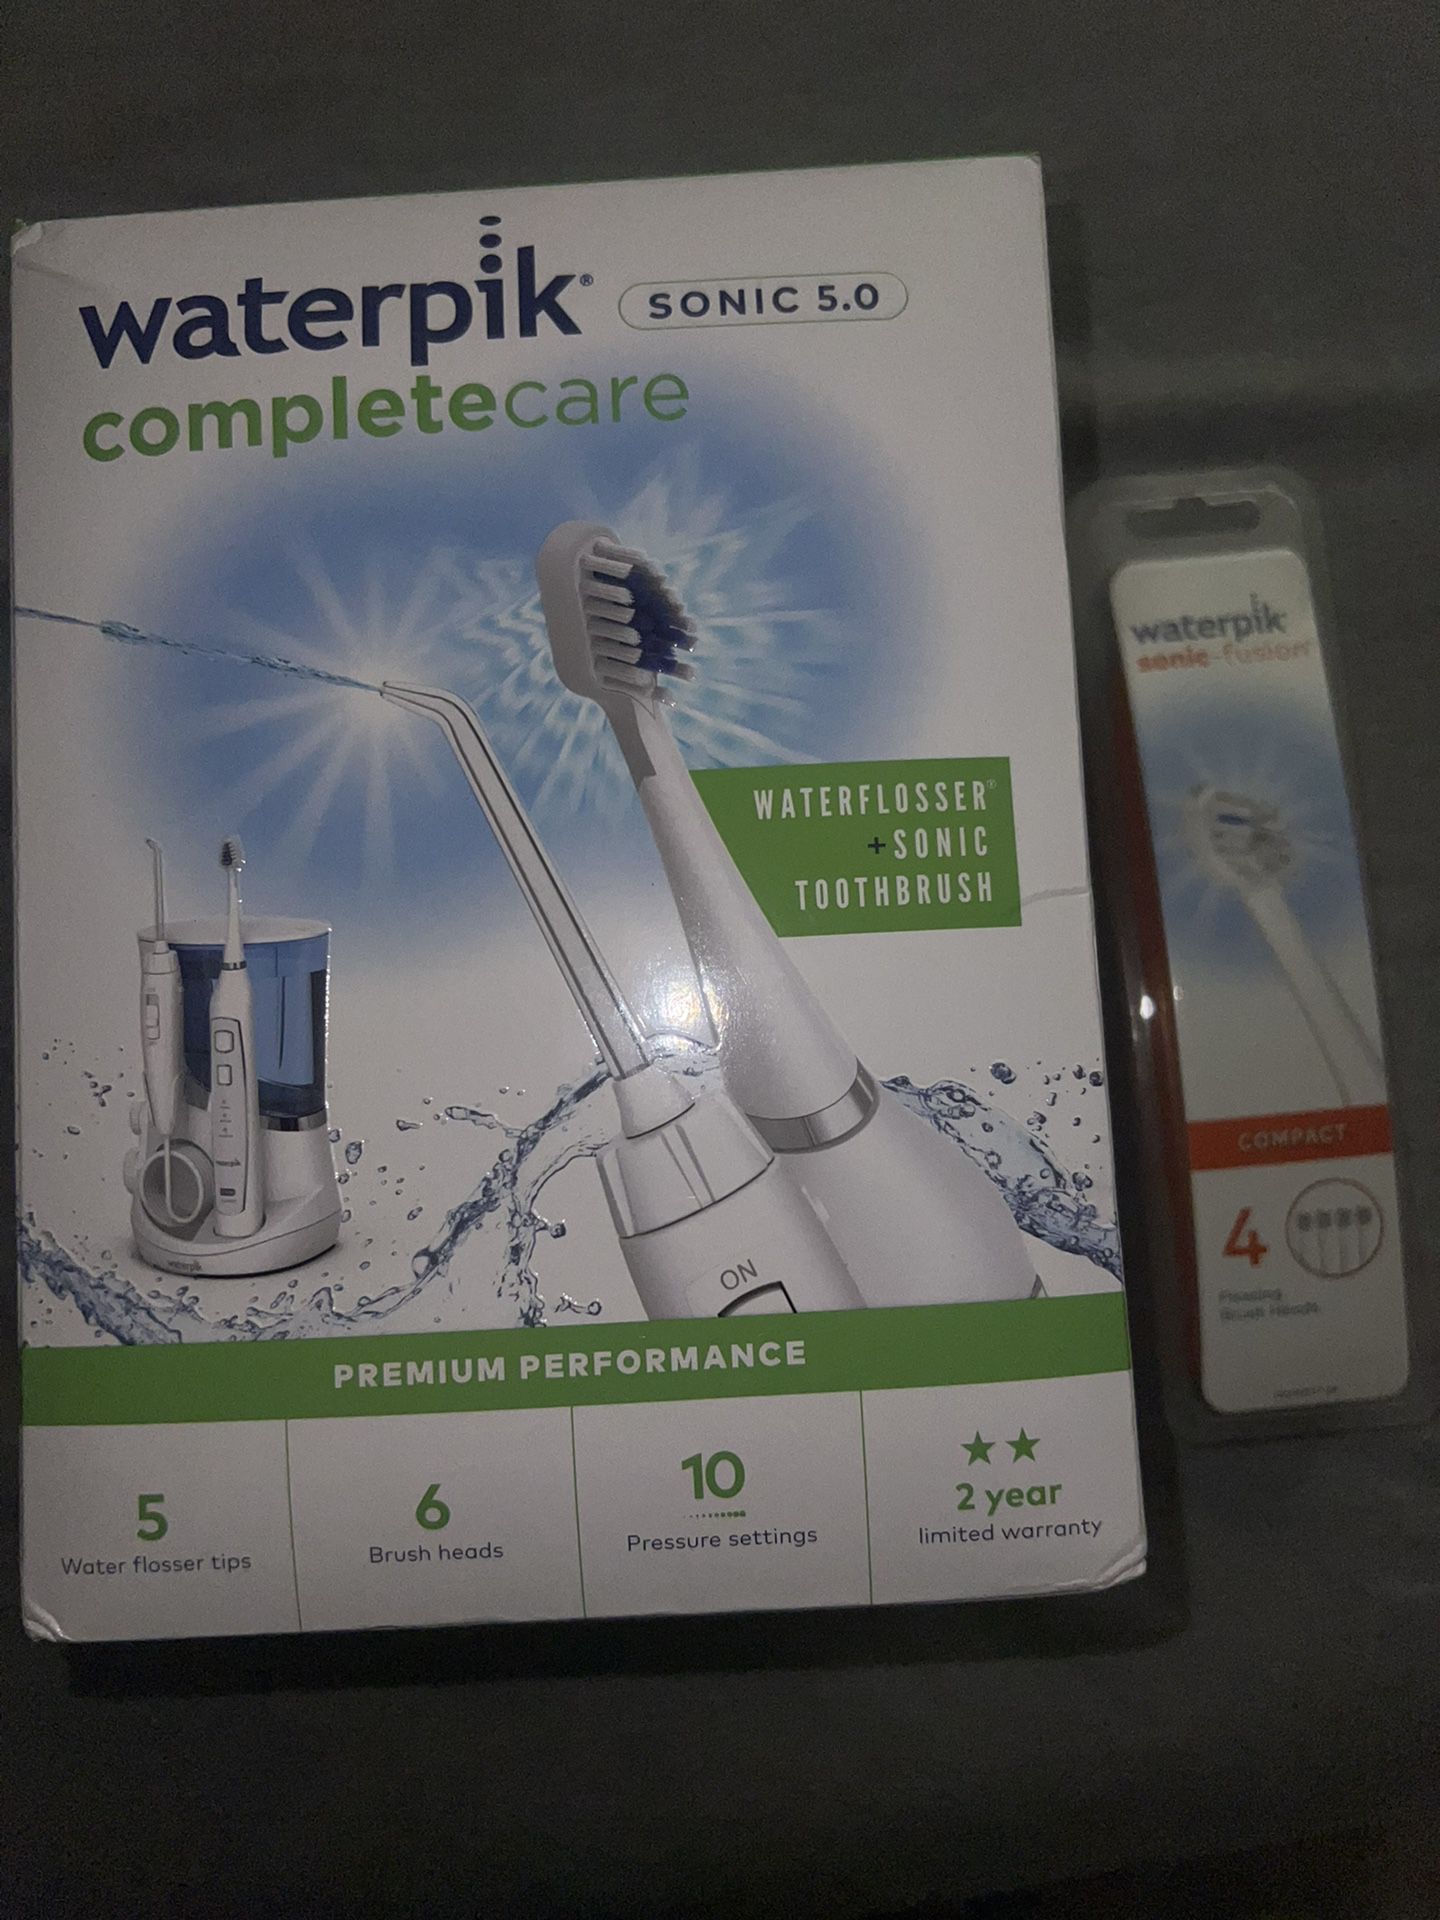 Waterpik Complete Care 5.0 $50